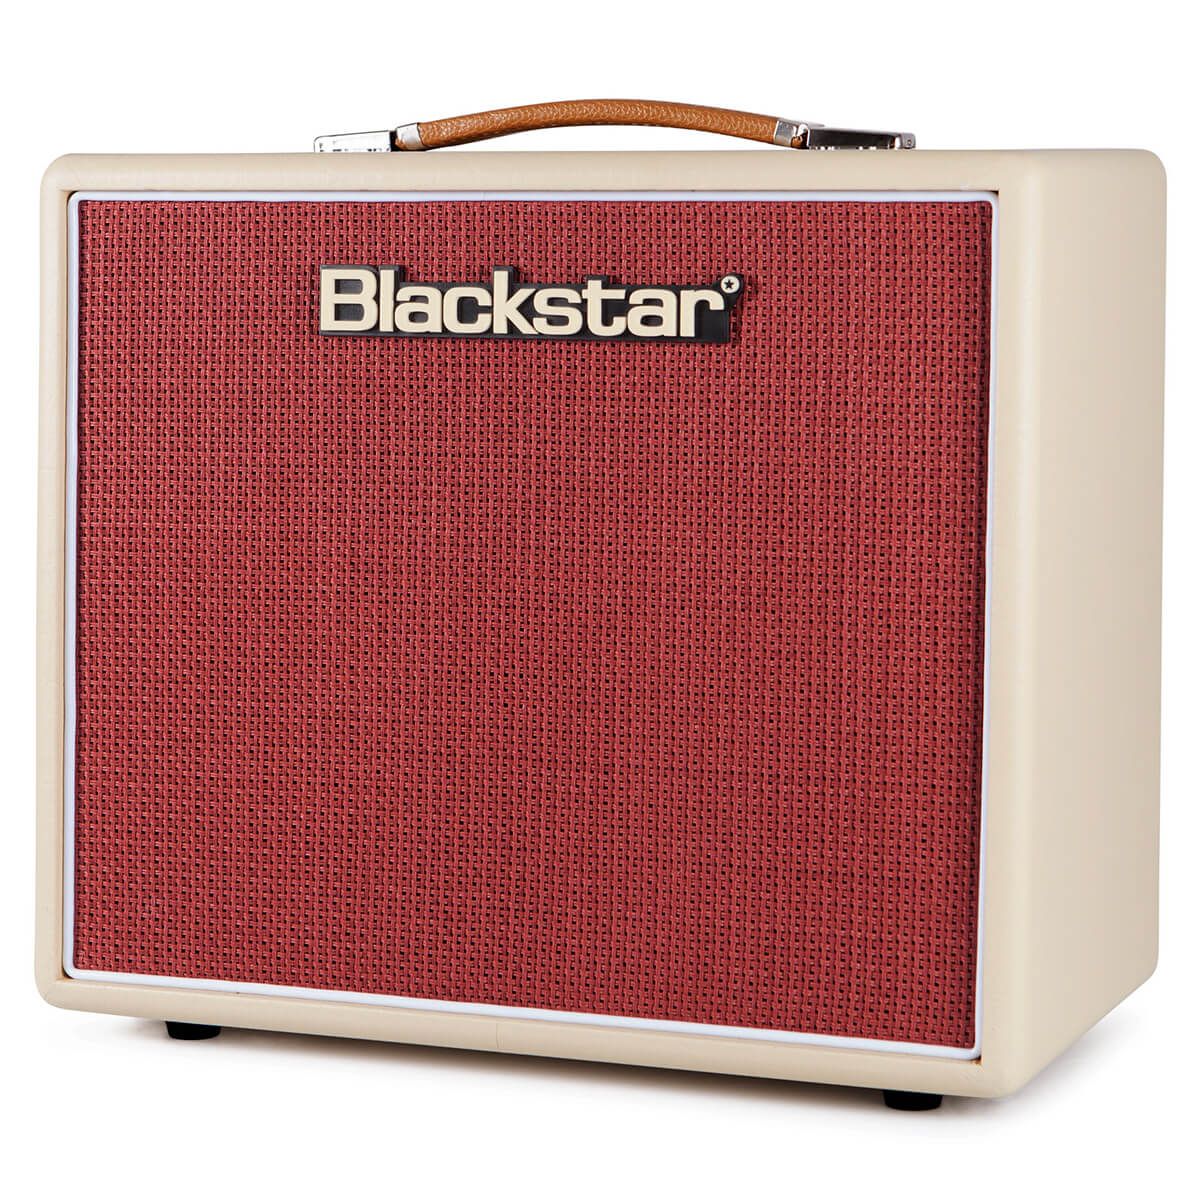 Blackstar Studio 10 6L6 1 X 12" 10 W Tube Guitar Combo Amp - Cream/Red